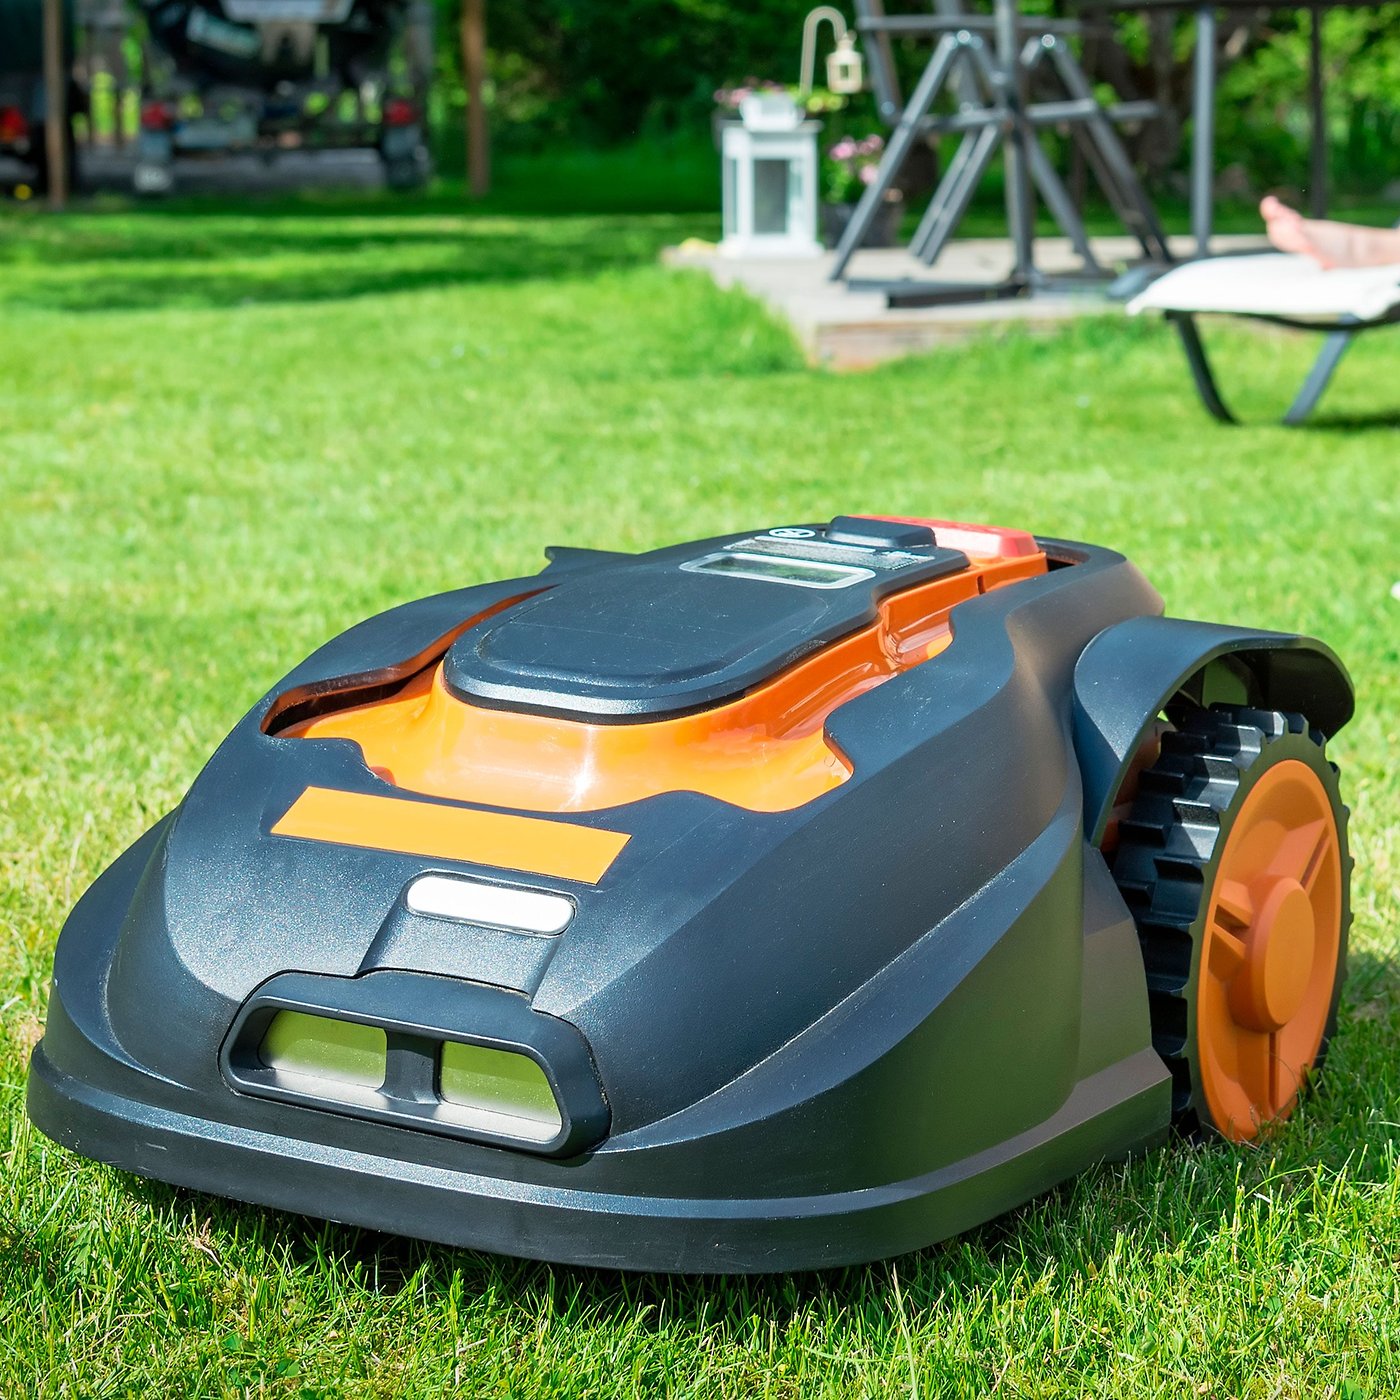 to buy the best robotic lawnmower NextPit